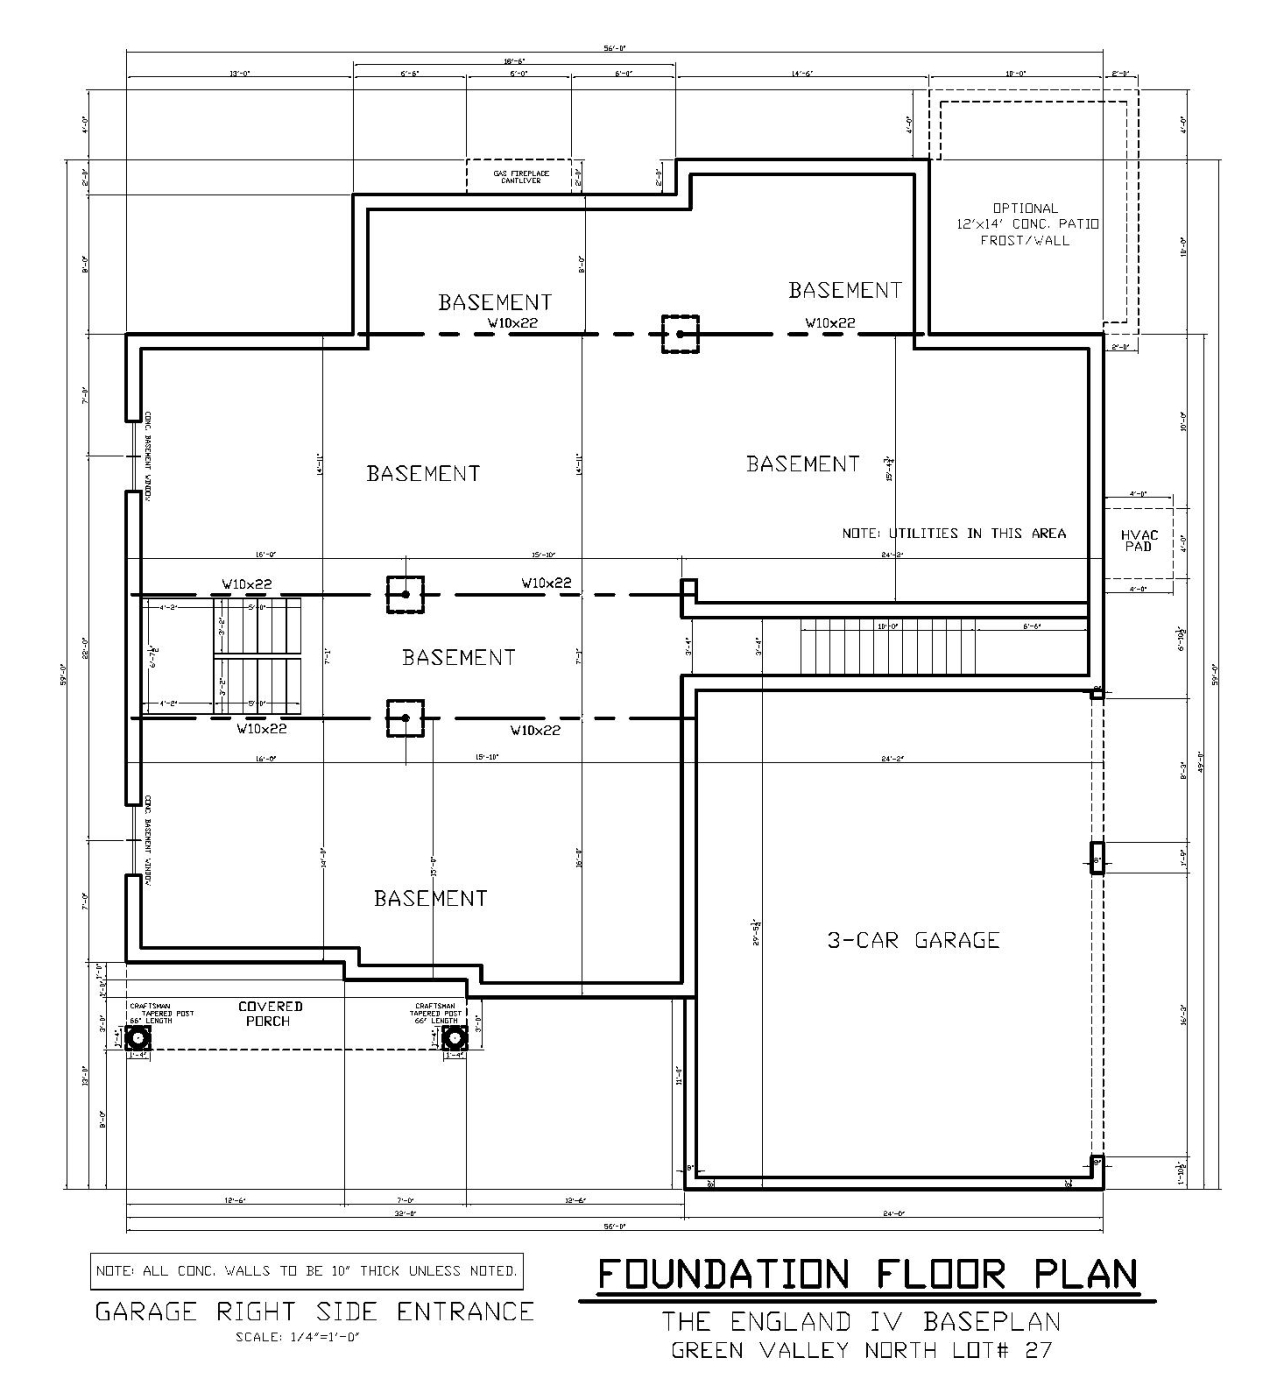 Foundation Plan